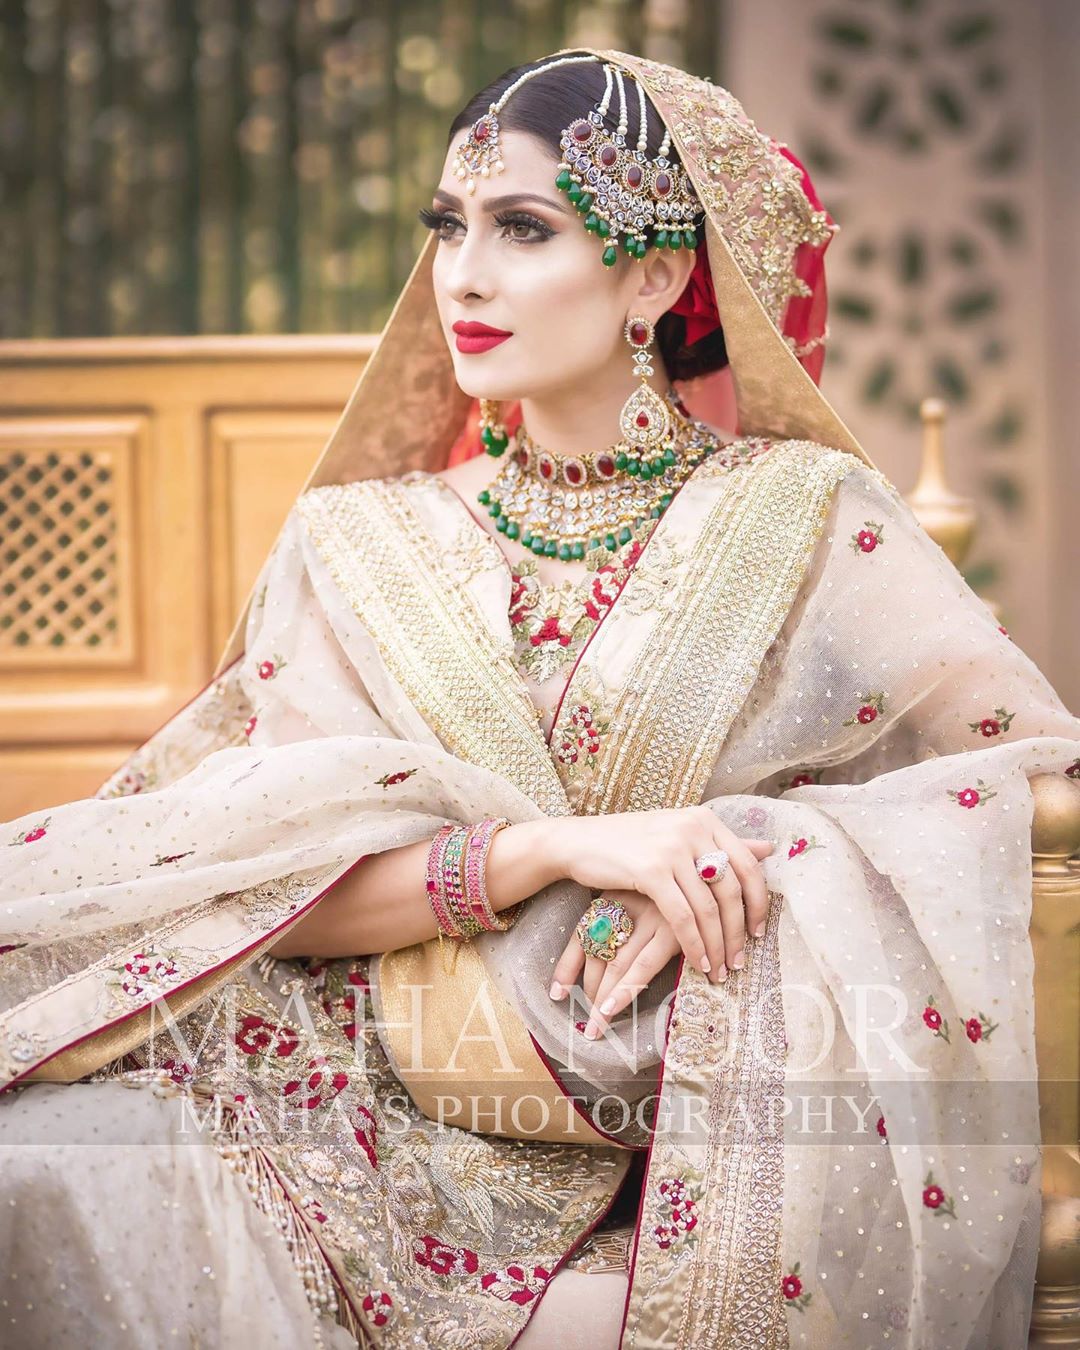 Beauty Queen Ayeza Khan Stunning Looks in New Bridal Photo Shoot